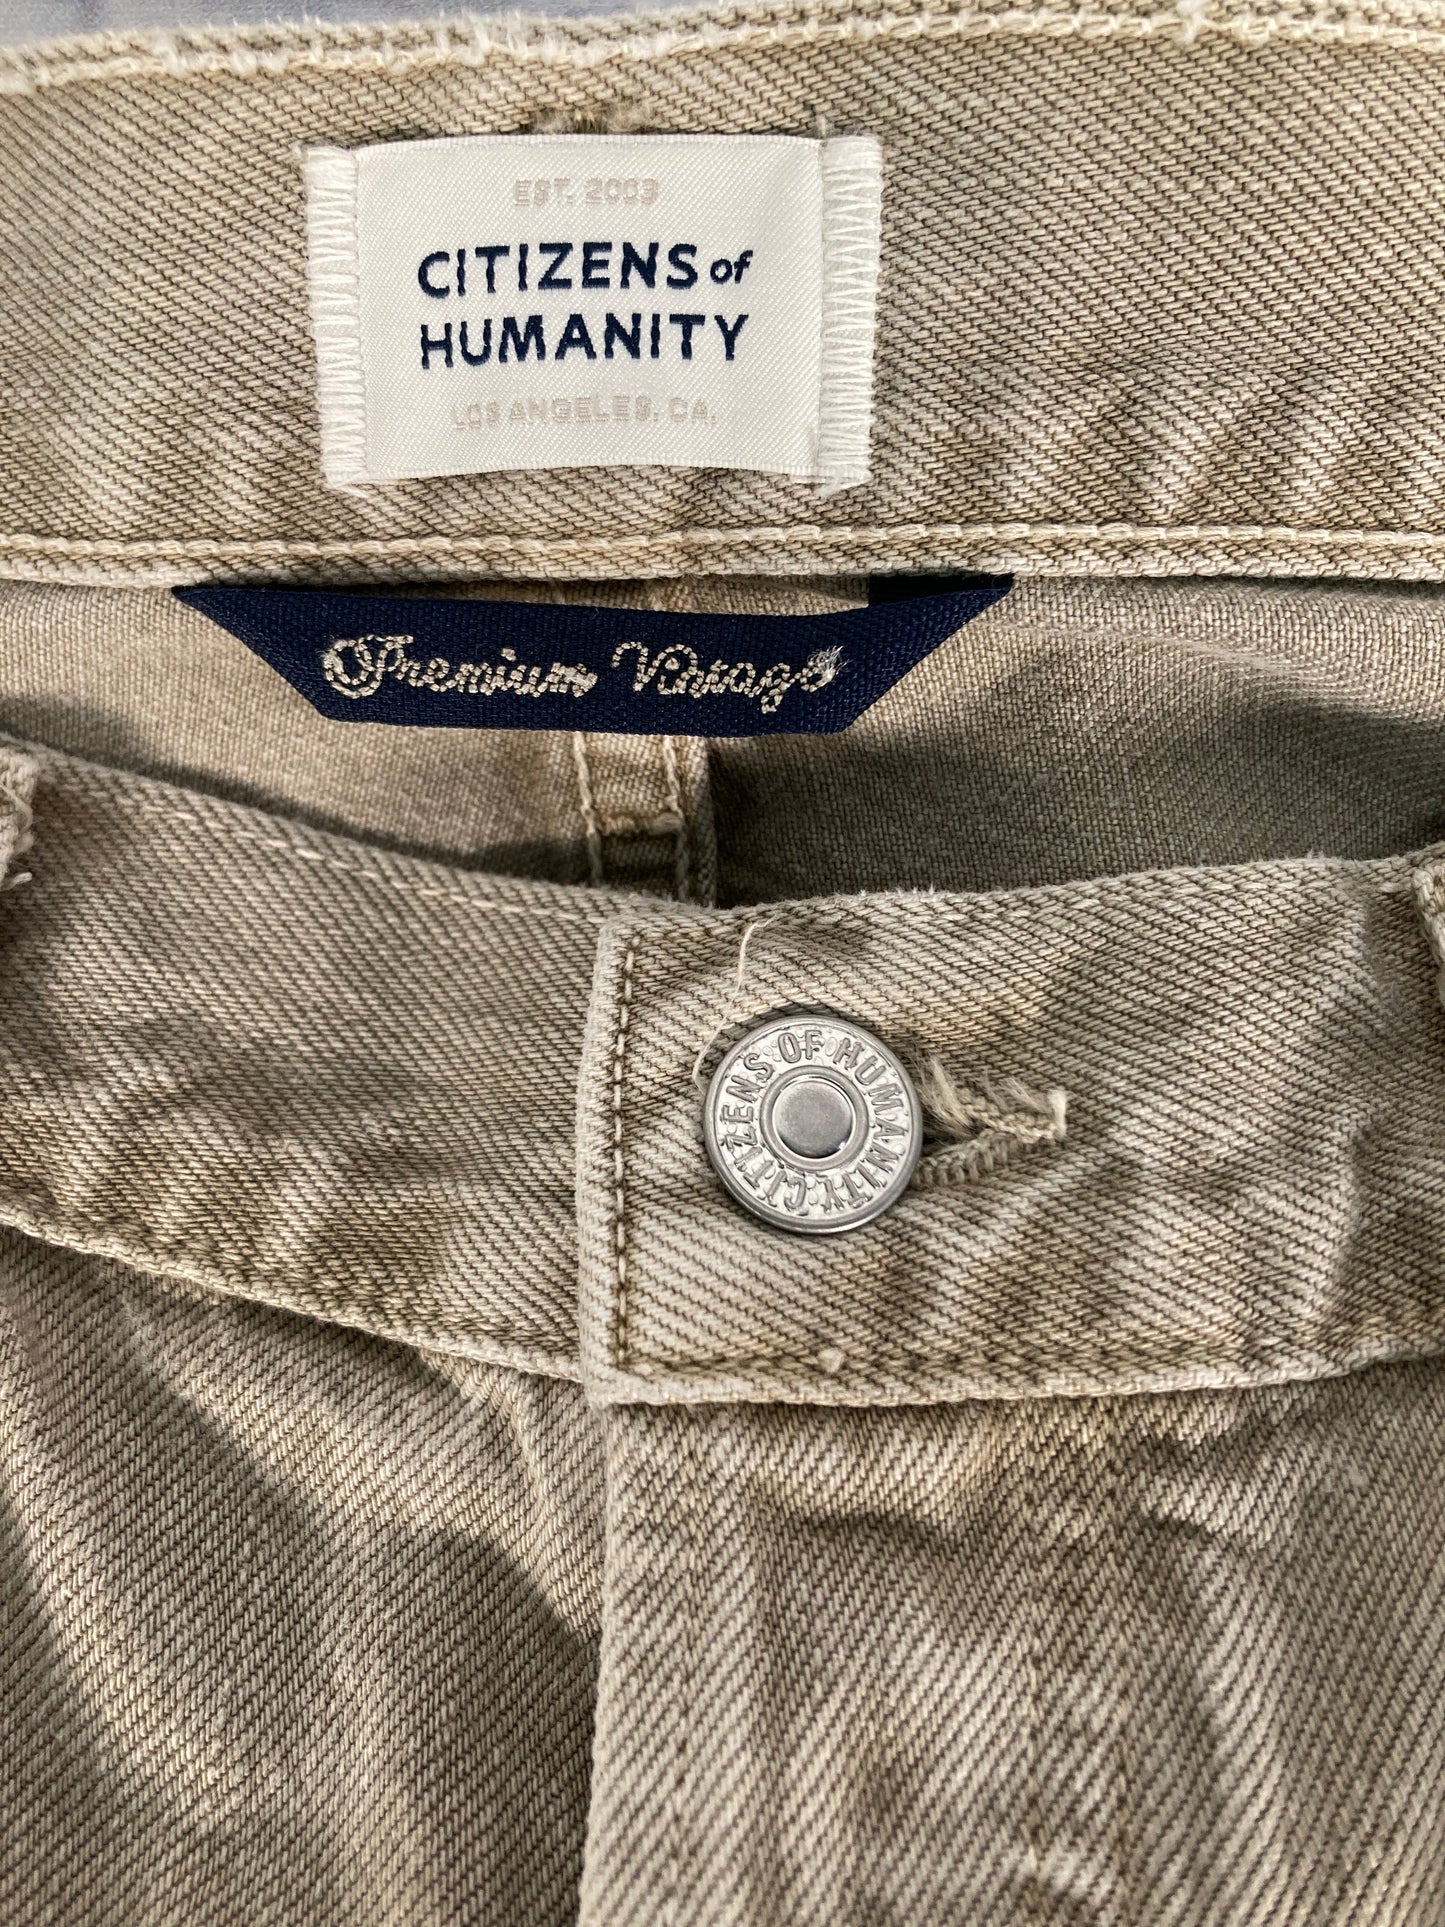 Grey Denim Jeans Designer Citizens Of Humanity, Size 6